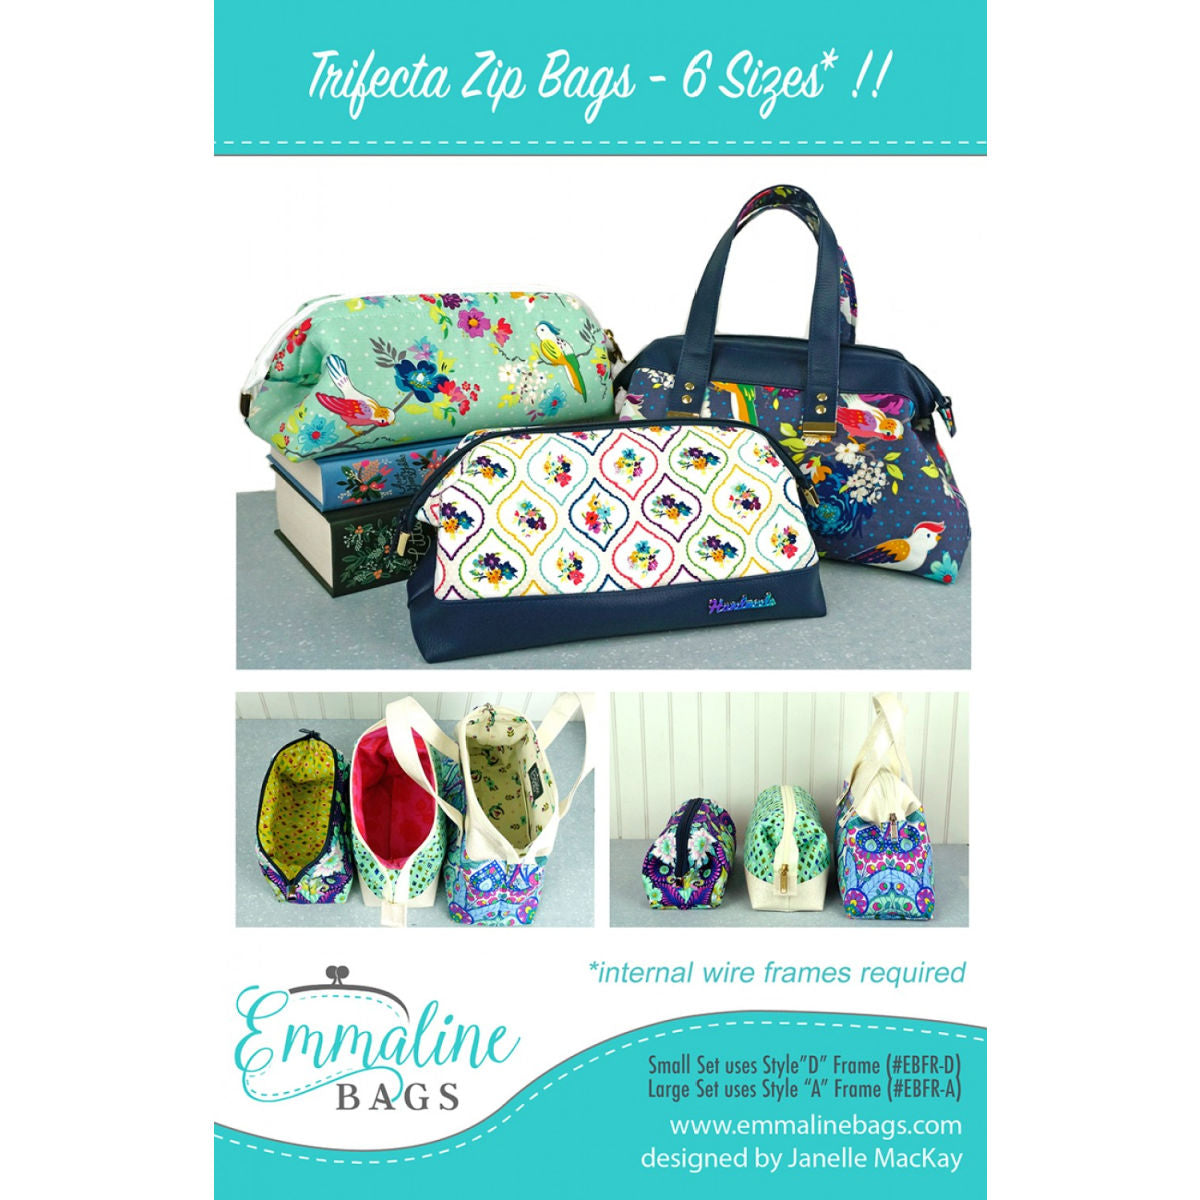 Trifecta Zip Bags sewing pattern